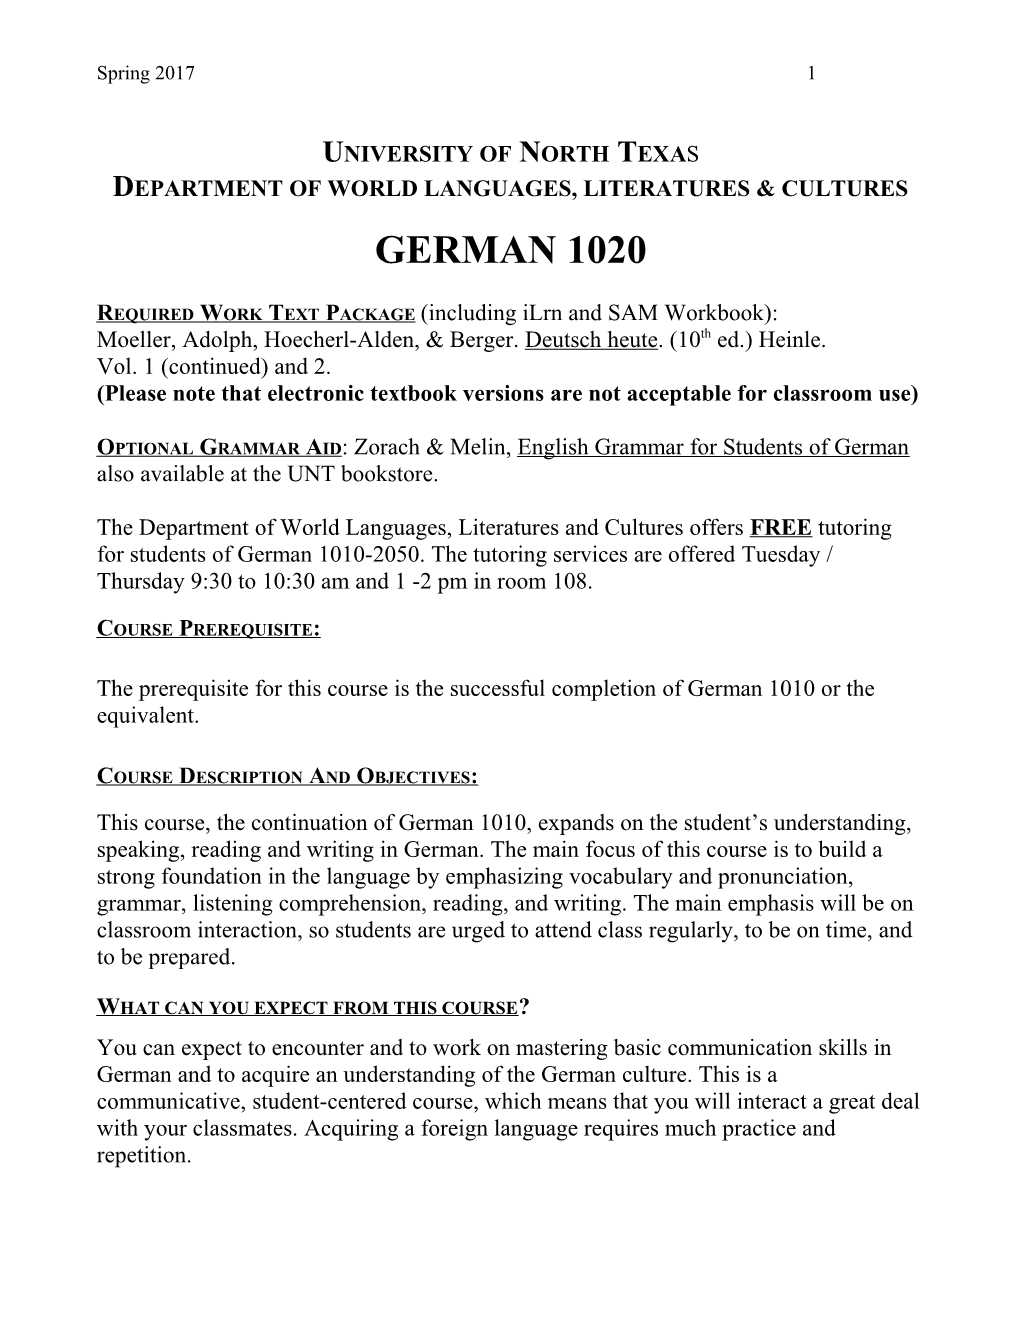 University of North Texa S Department of World Languages, Literatures & Cultures German 1020 s3